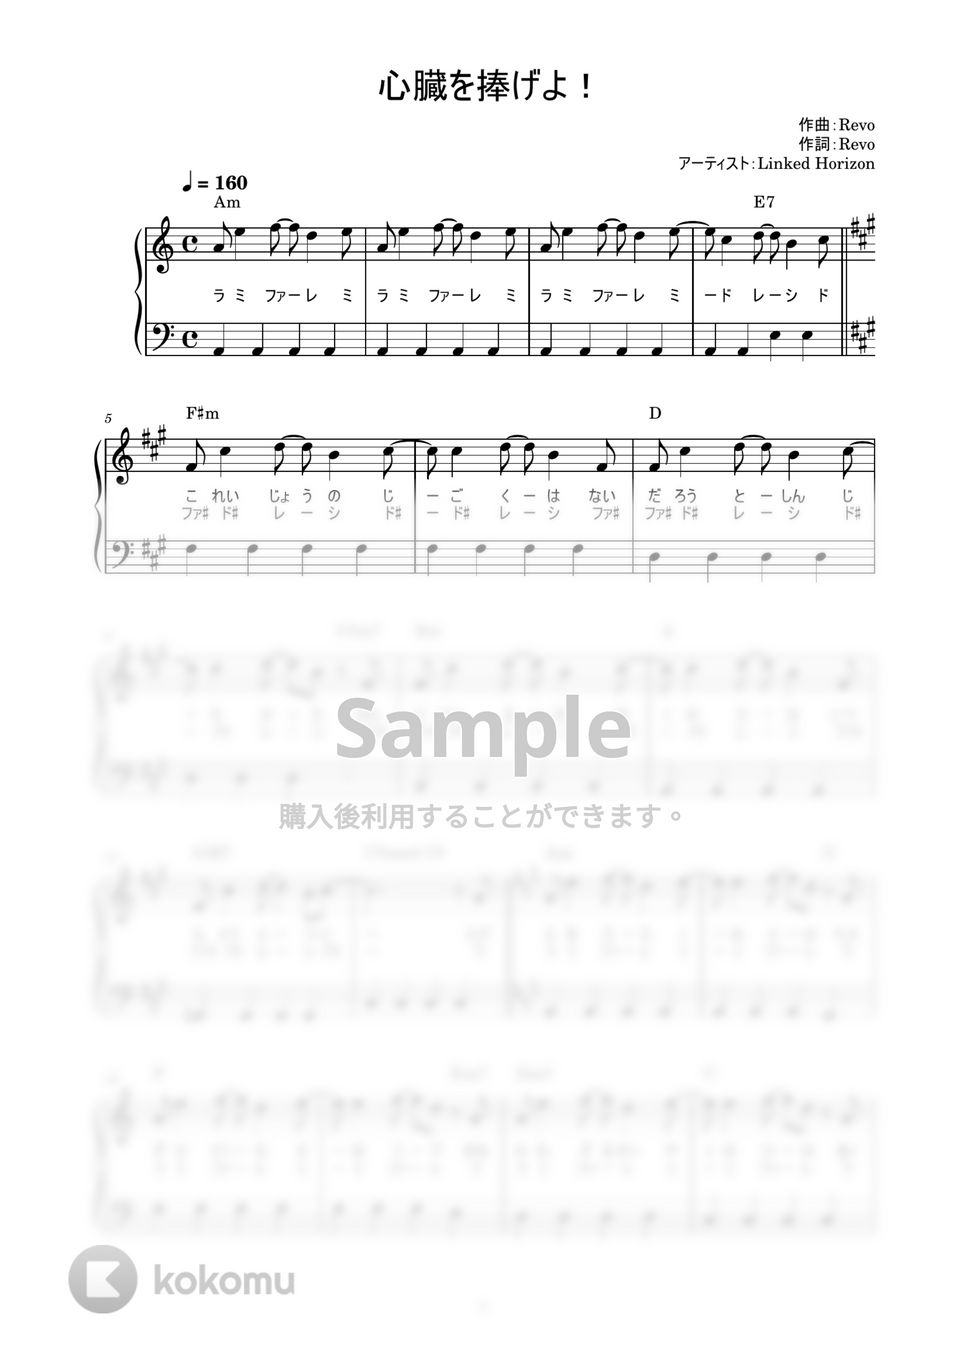 LINKED HORIZON - 心臓を捧げよ! (かんたん / 歌詞付き / ドレミ付き / 初心者) by piano.tokyo